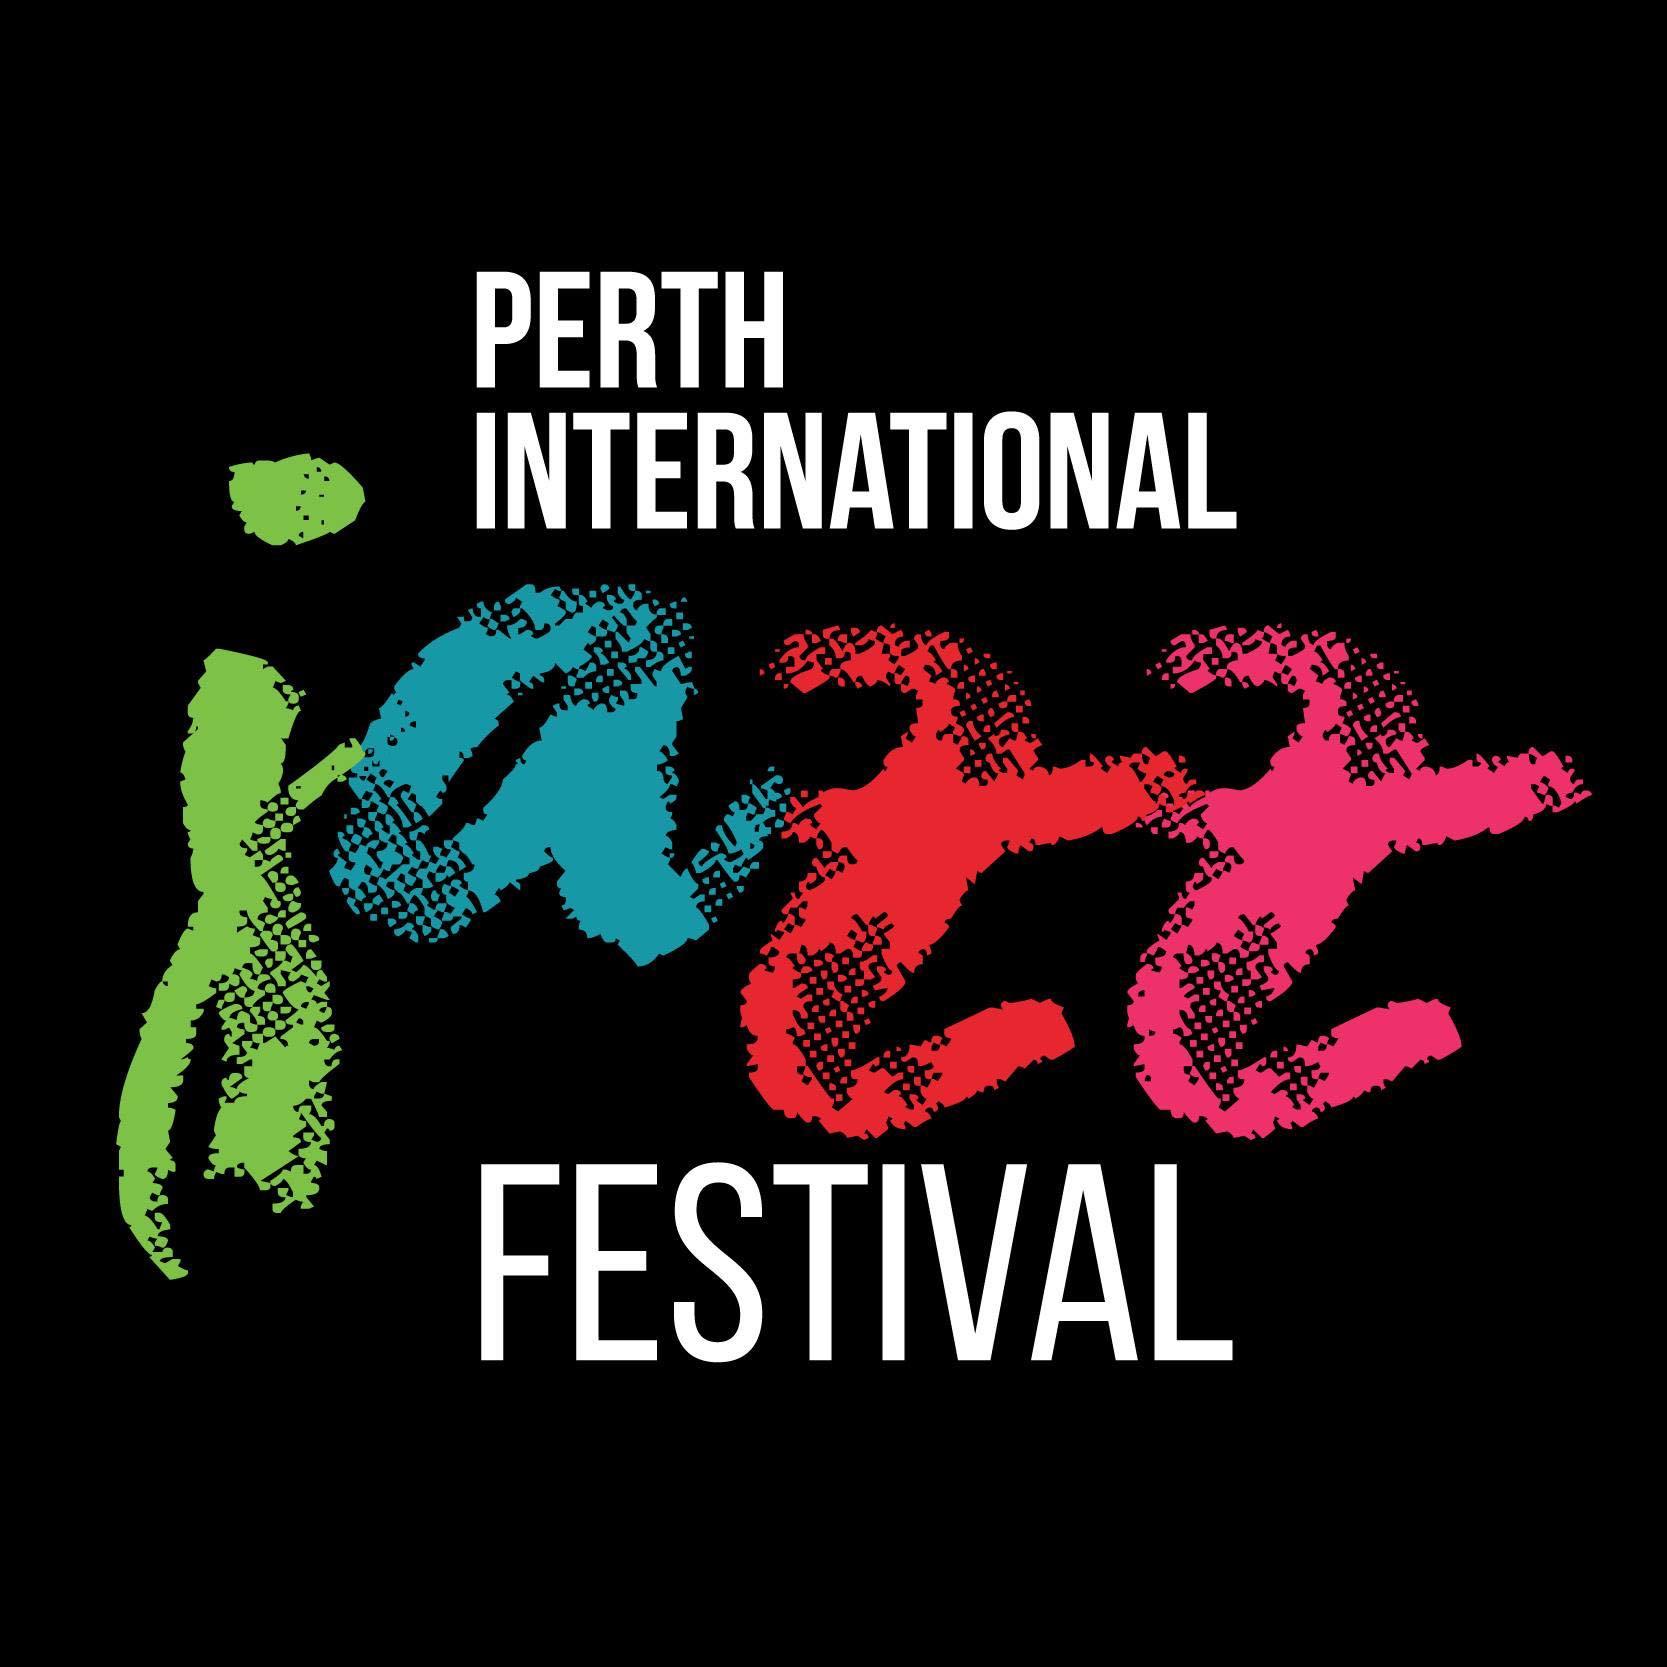 Perth International Jazz Festival